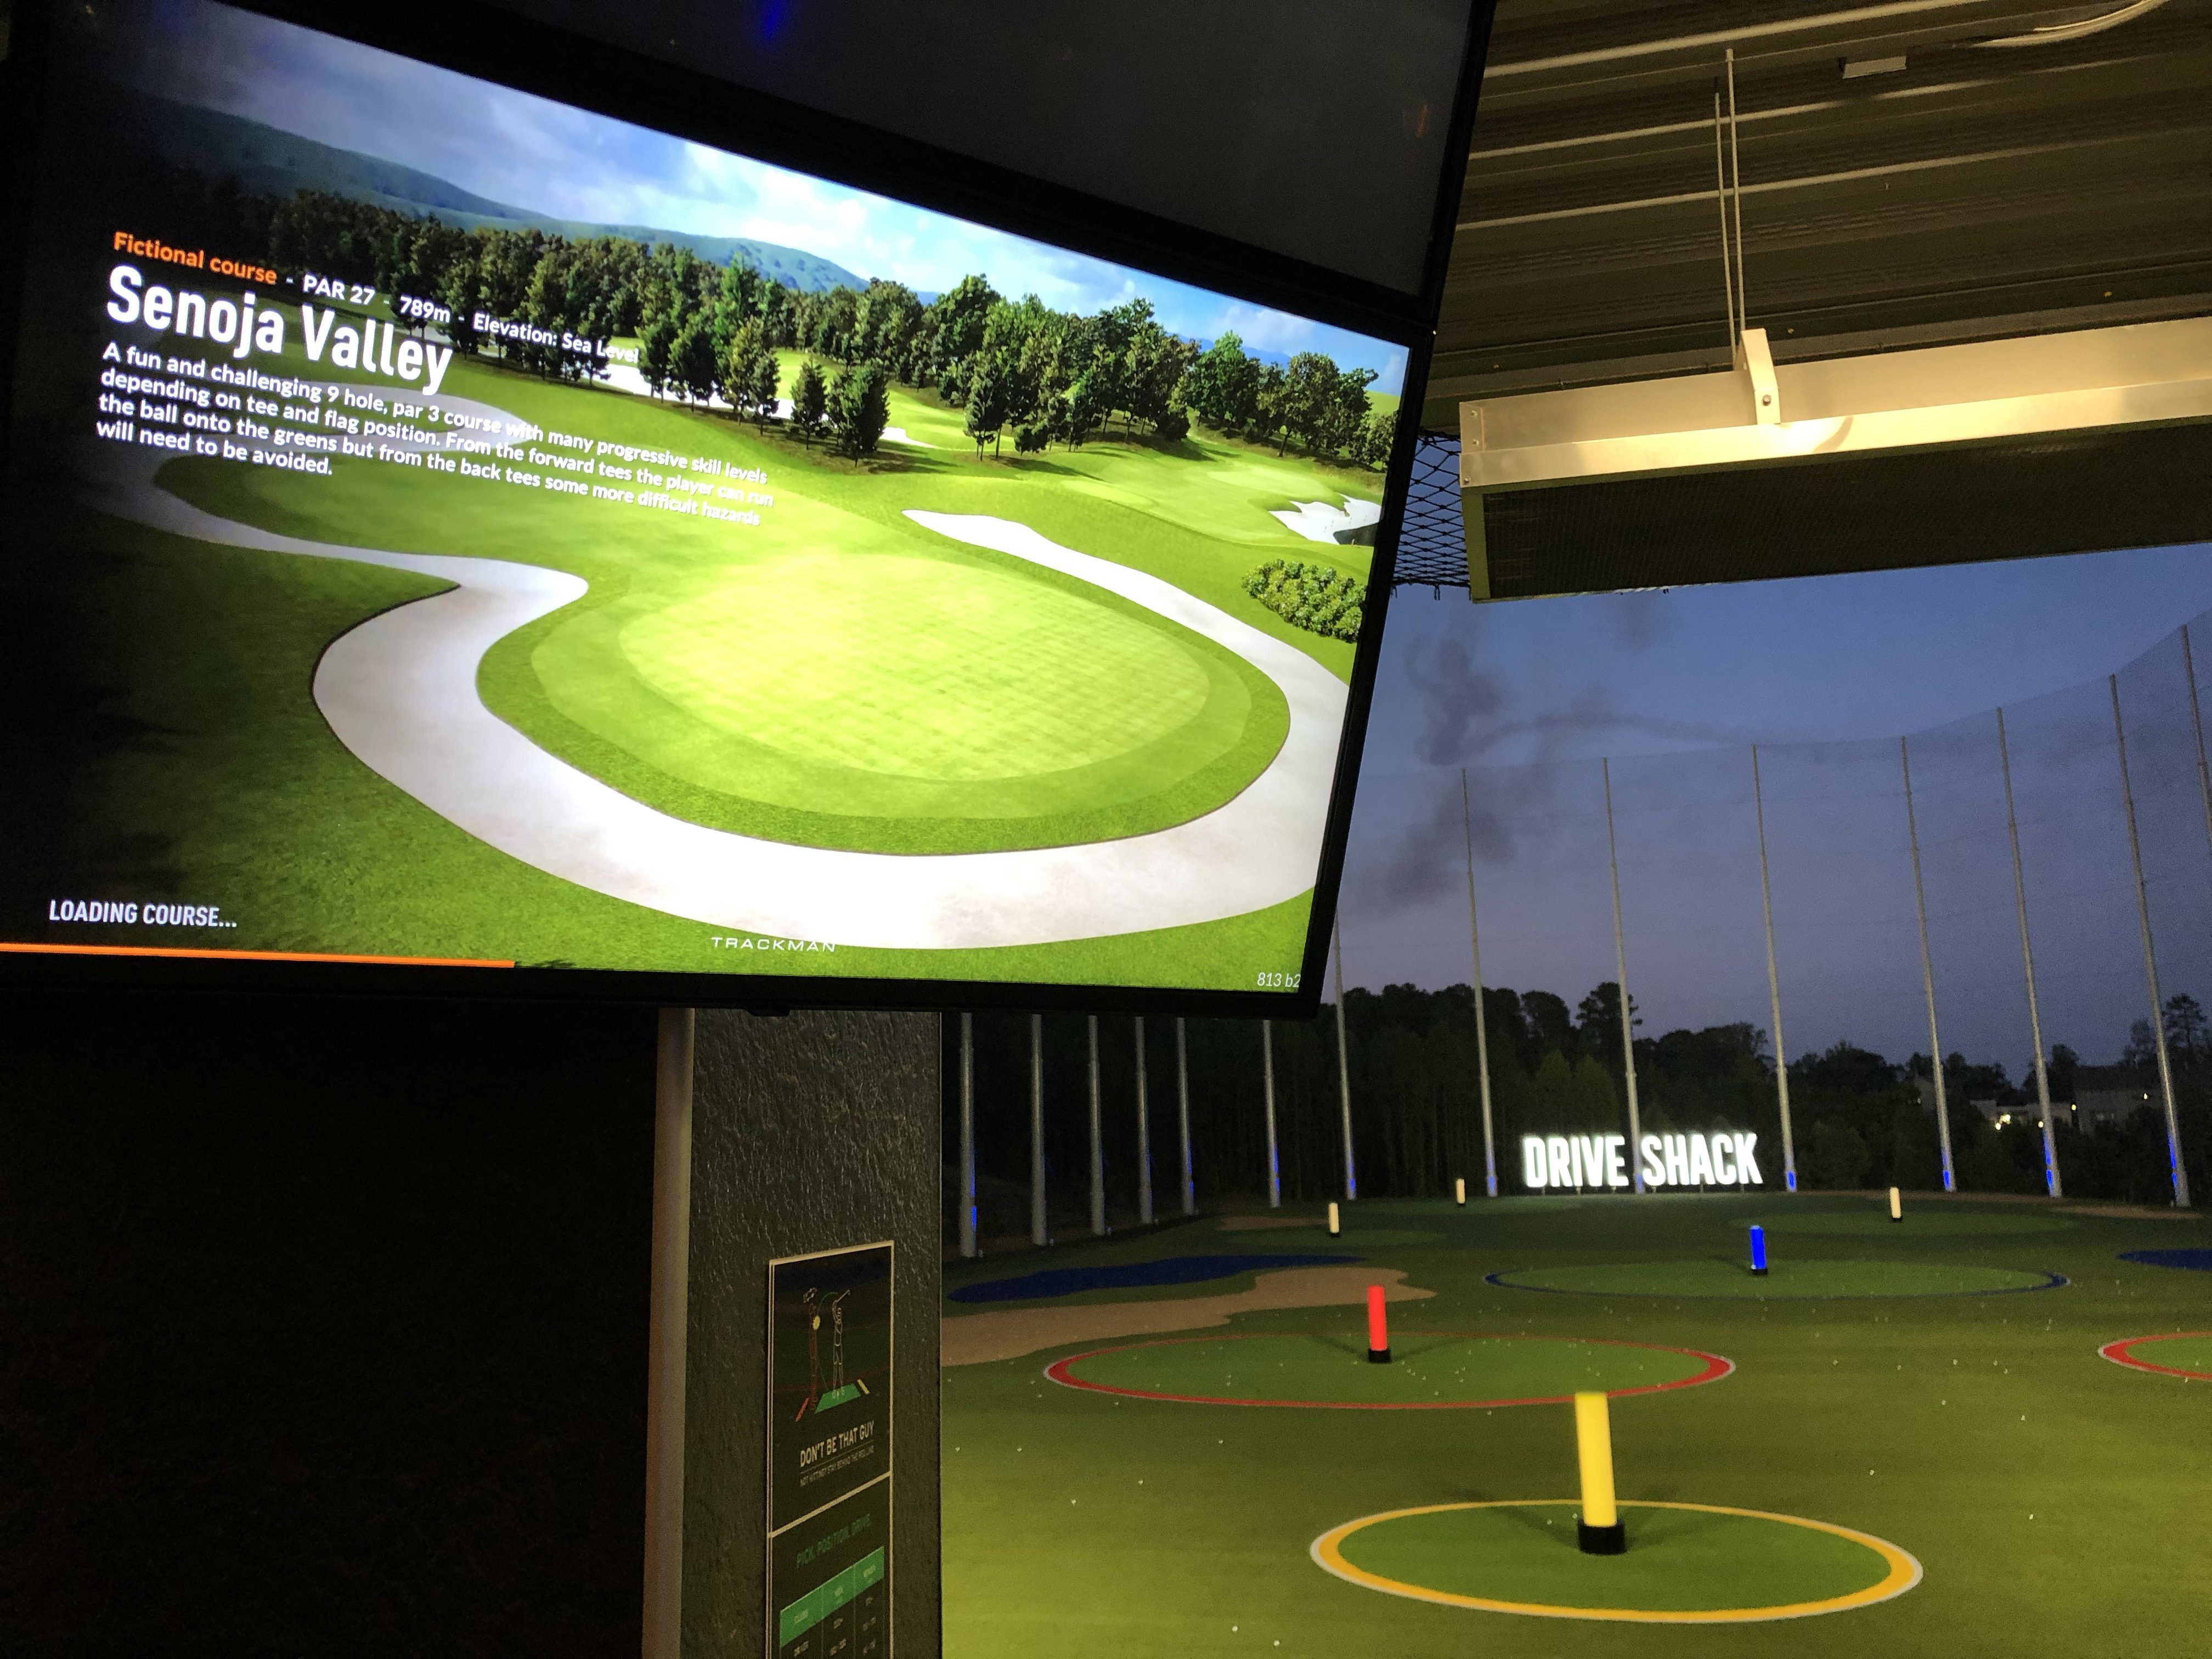 Drive Shack: Golf Range, Interactive Games, Food & Drinks